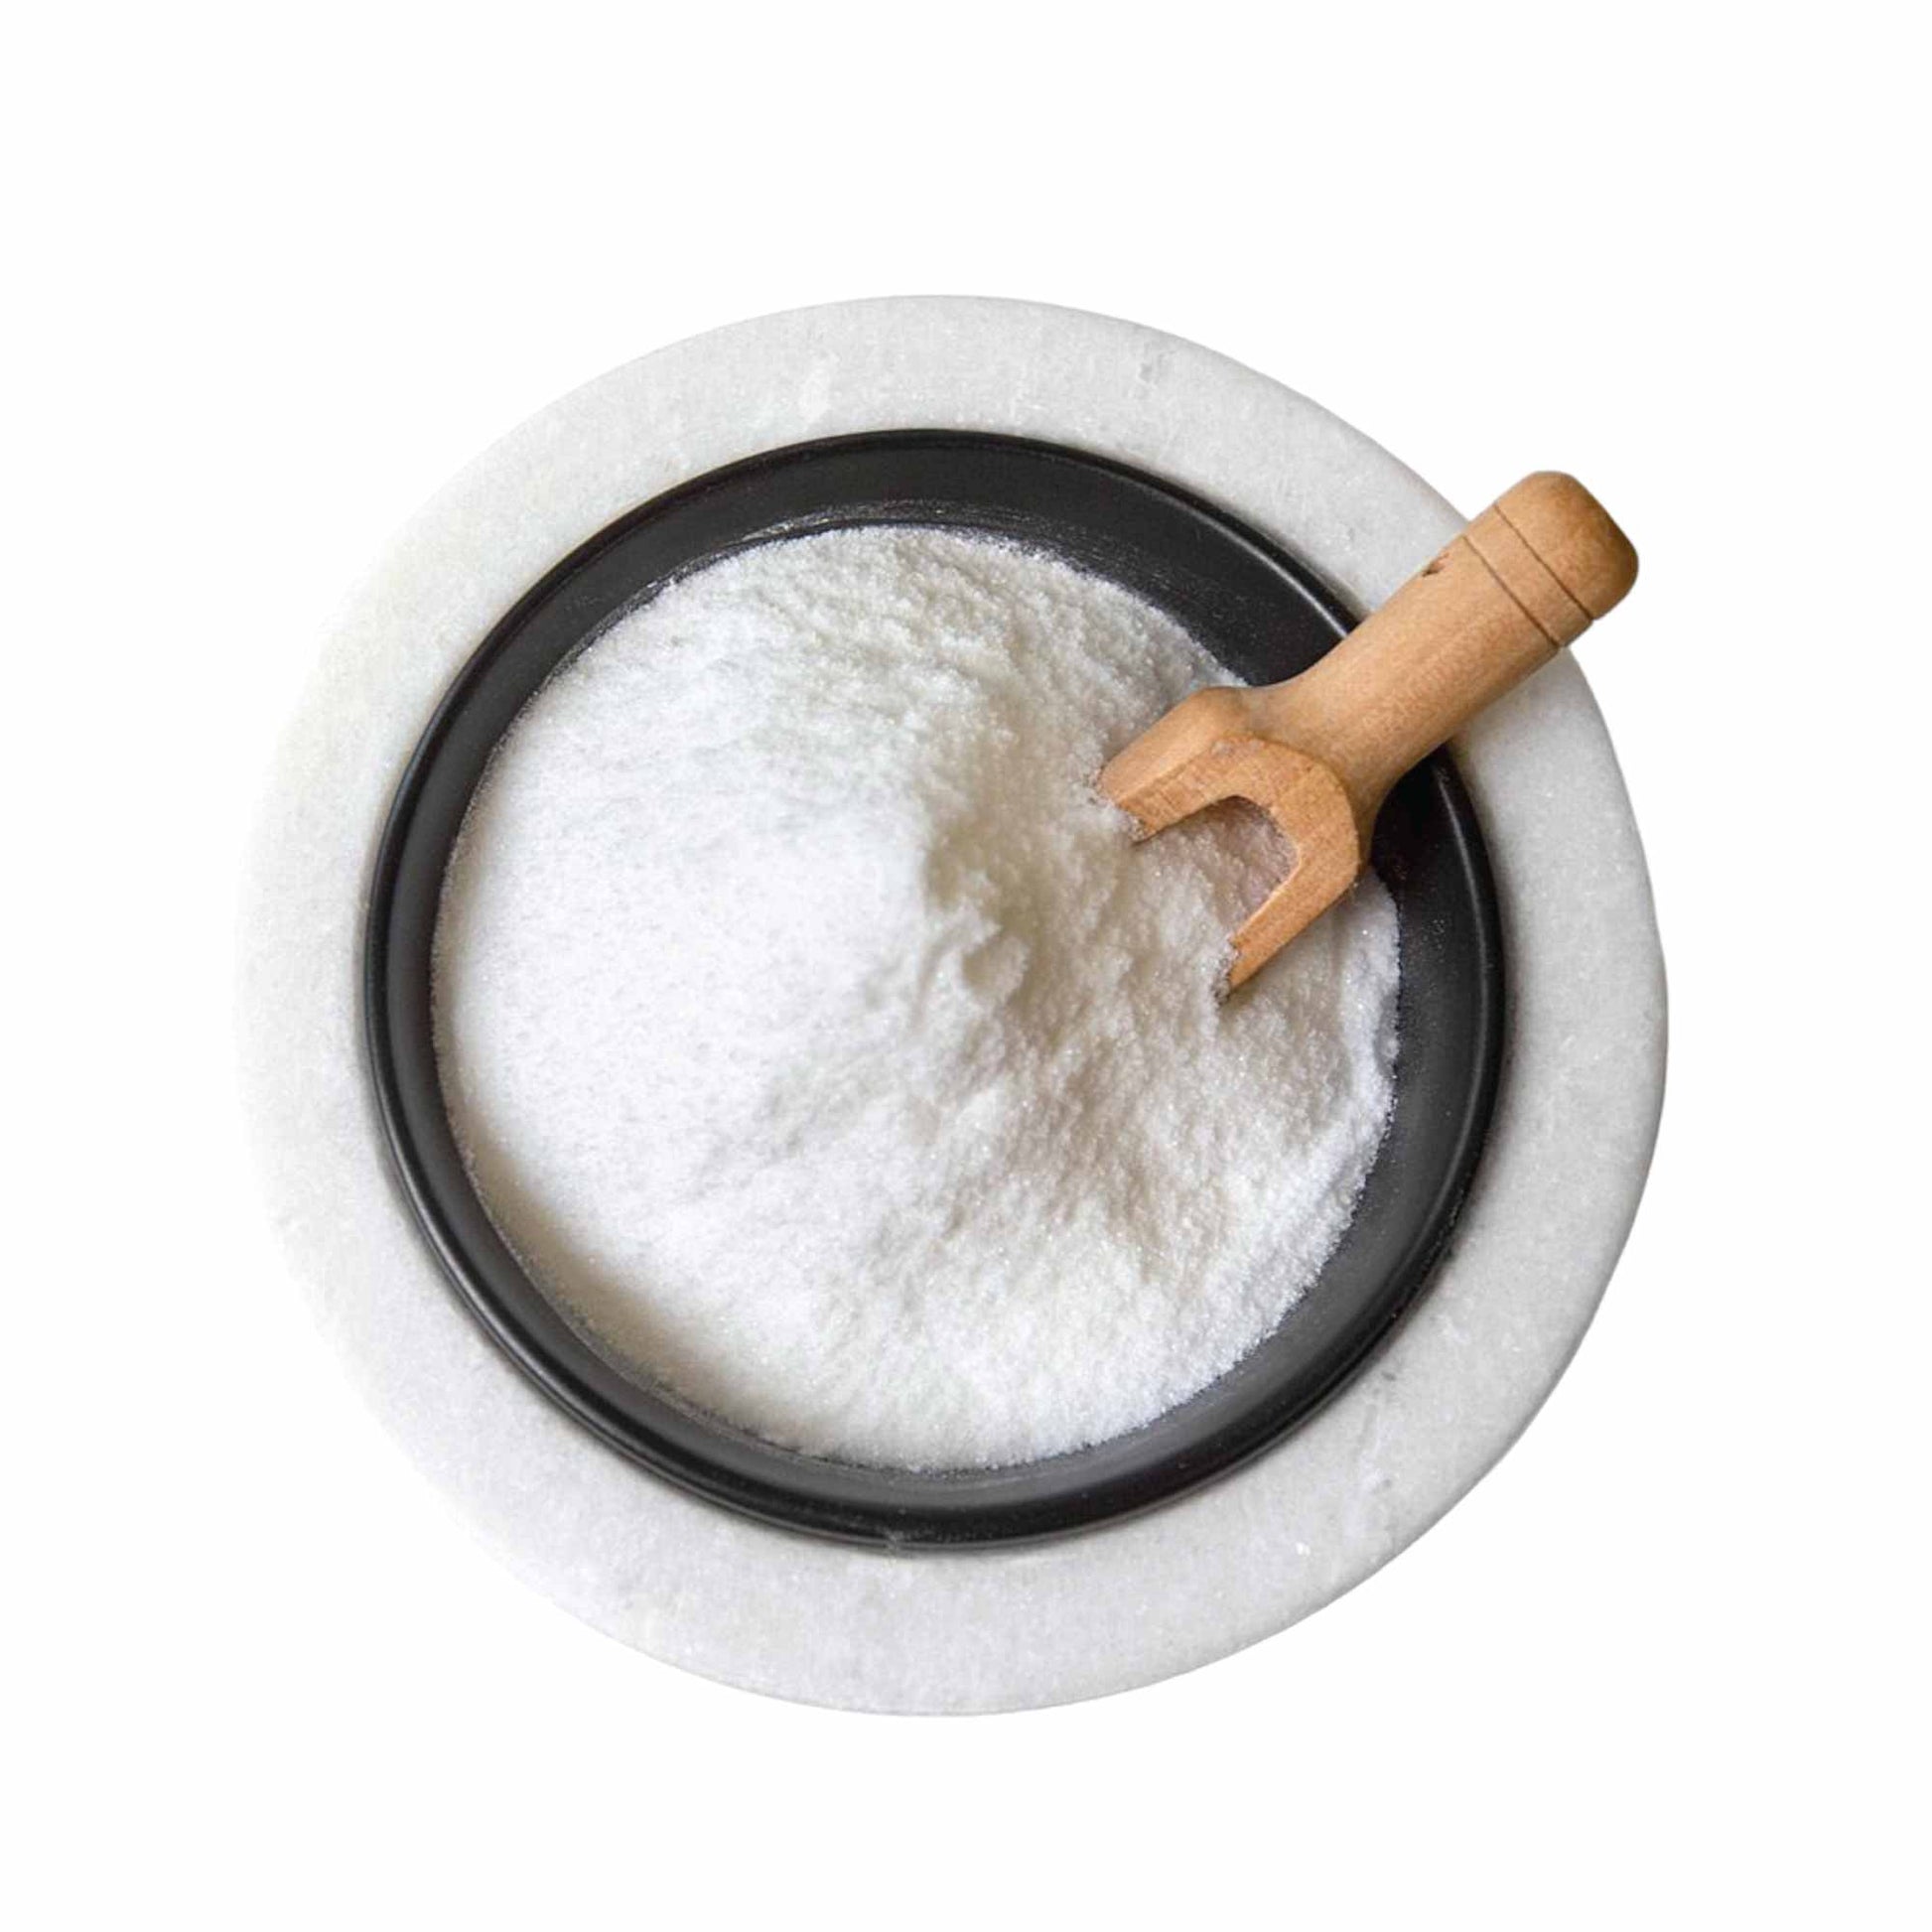 1.3Kg Vitamin C Powder Tub L-Ascorbic Acid Pure Pharmaceutical Grade Supplement